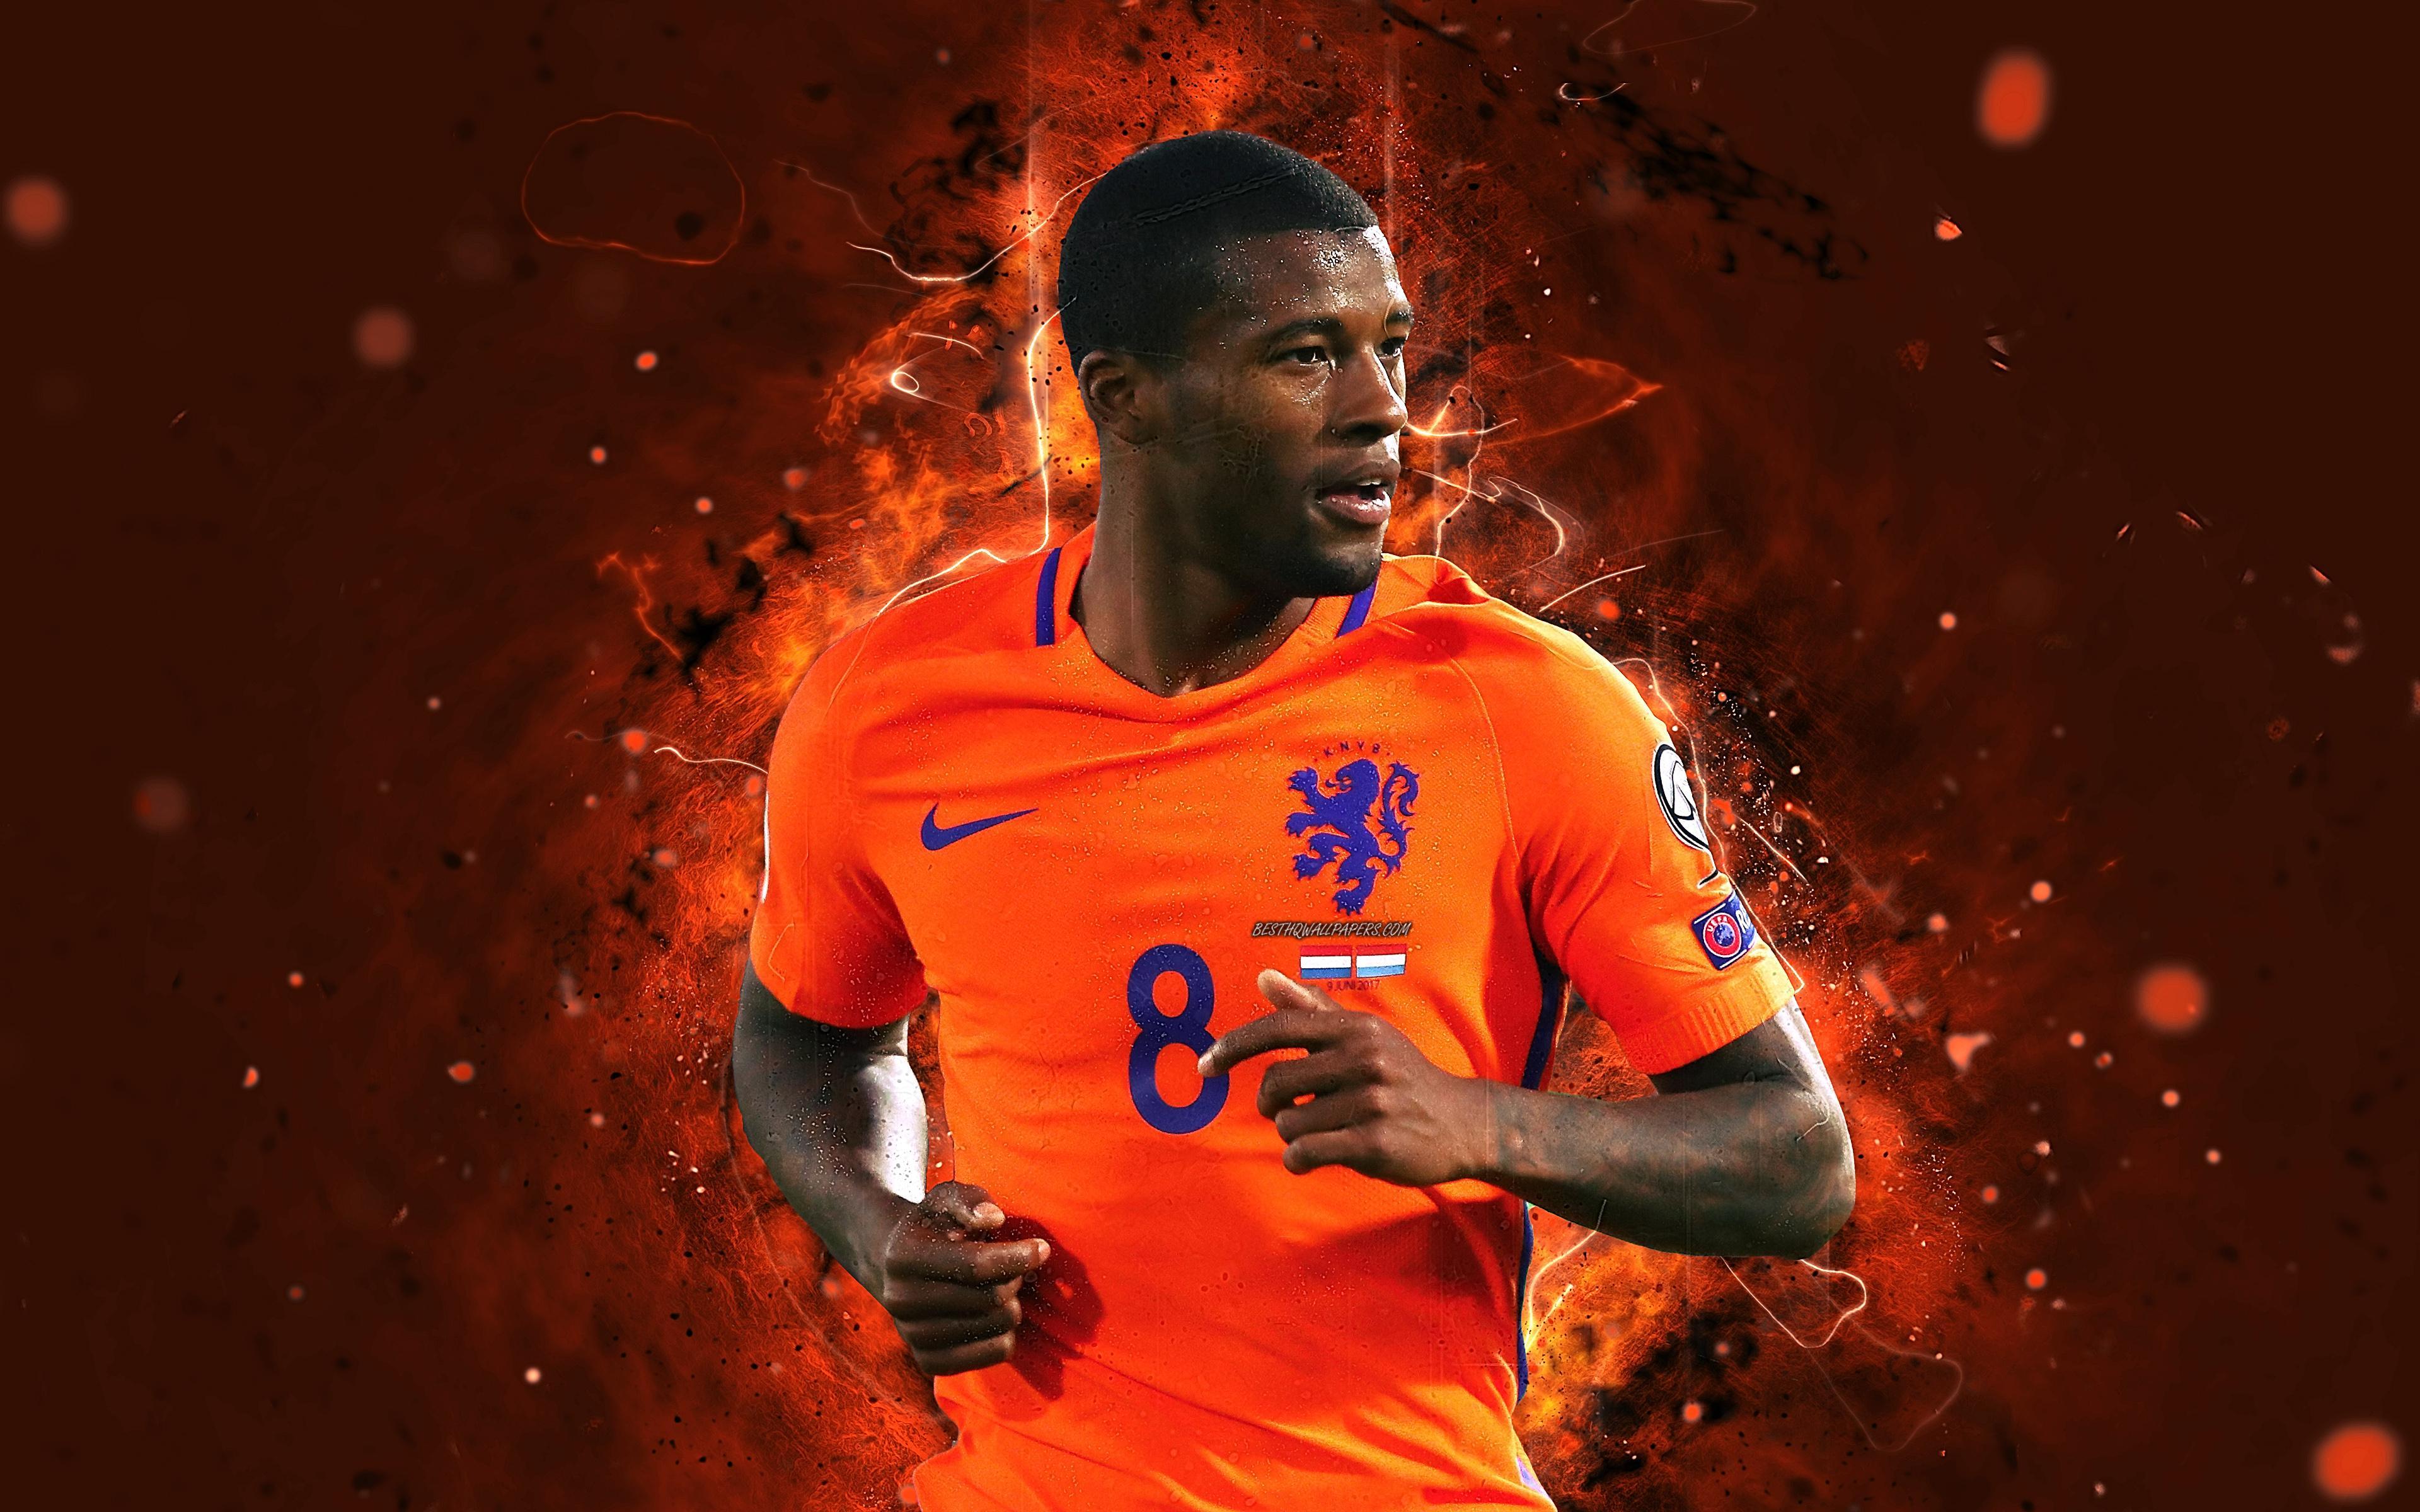 Netherlands National Football Team Wallpapers